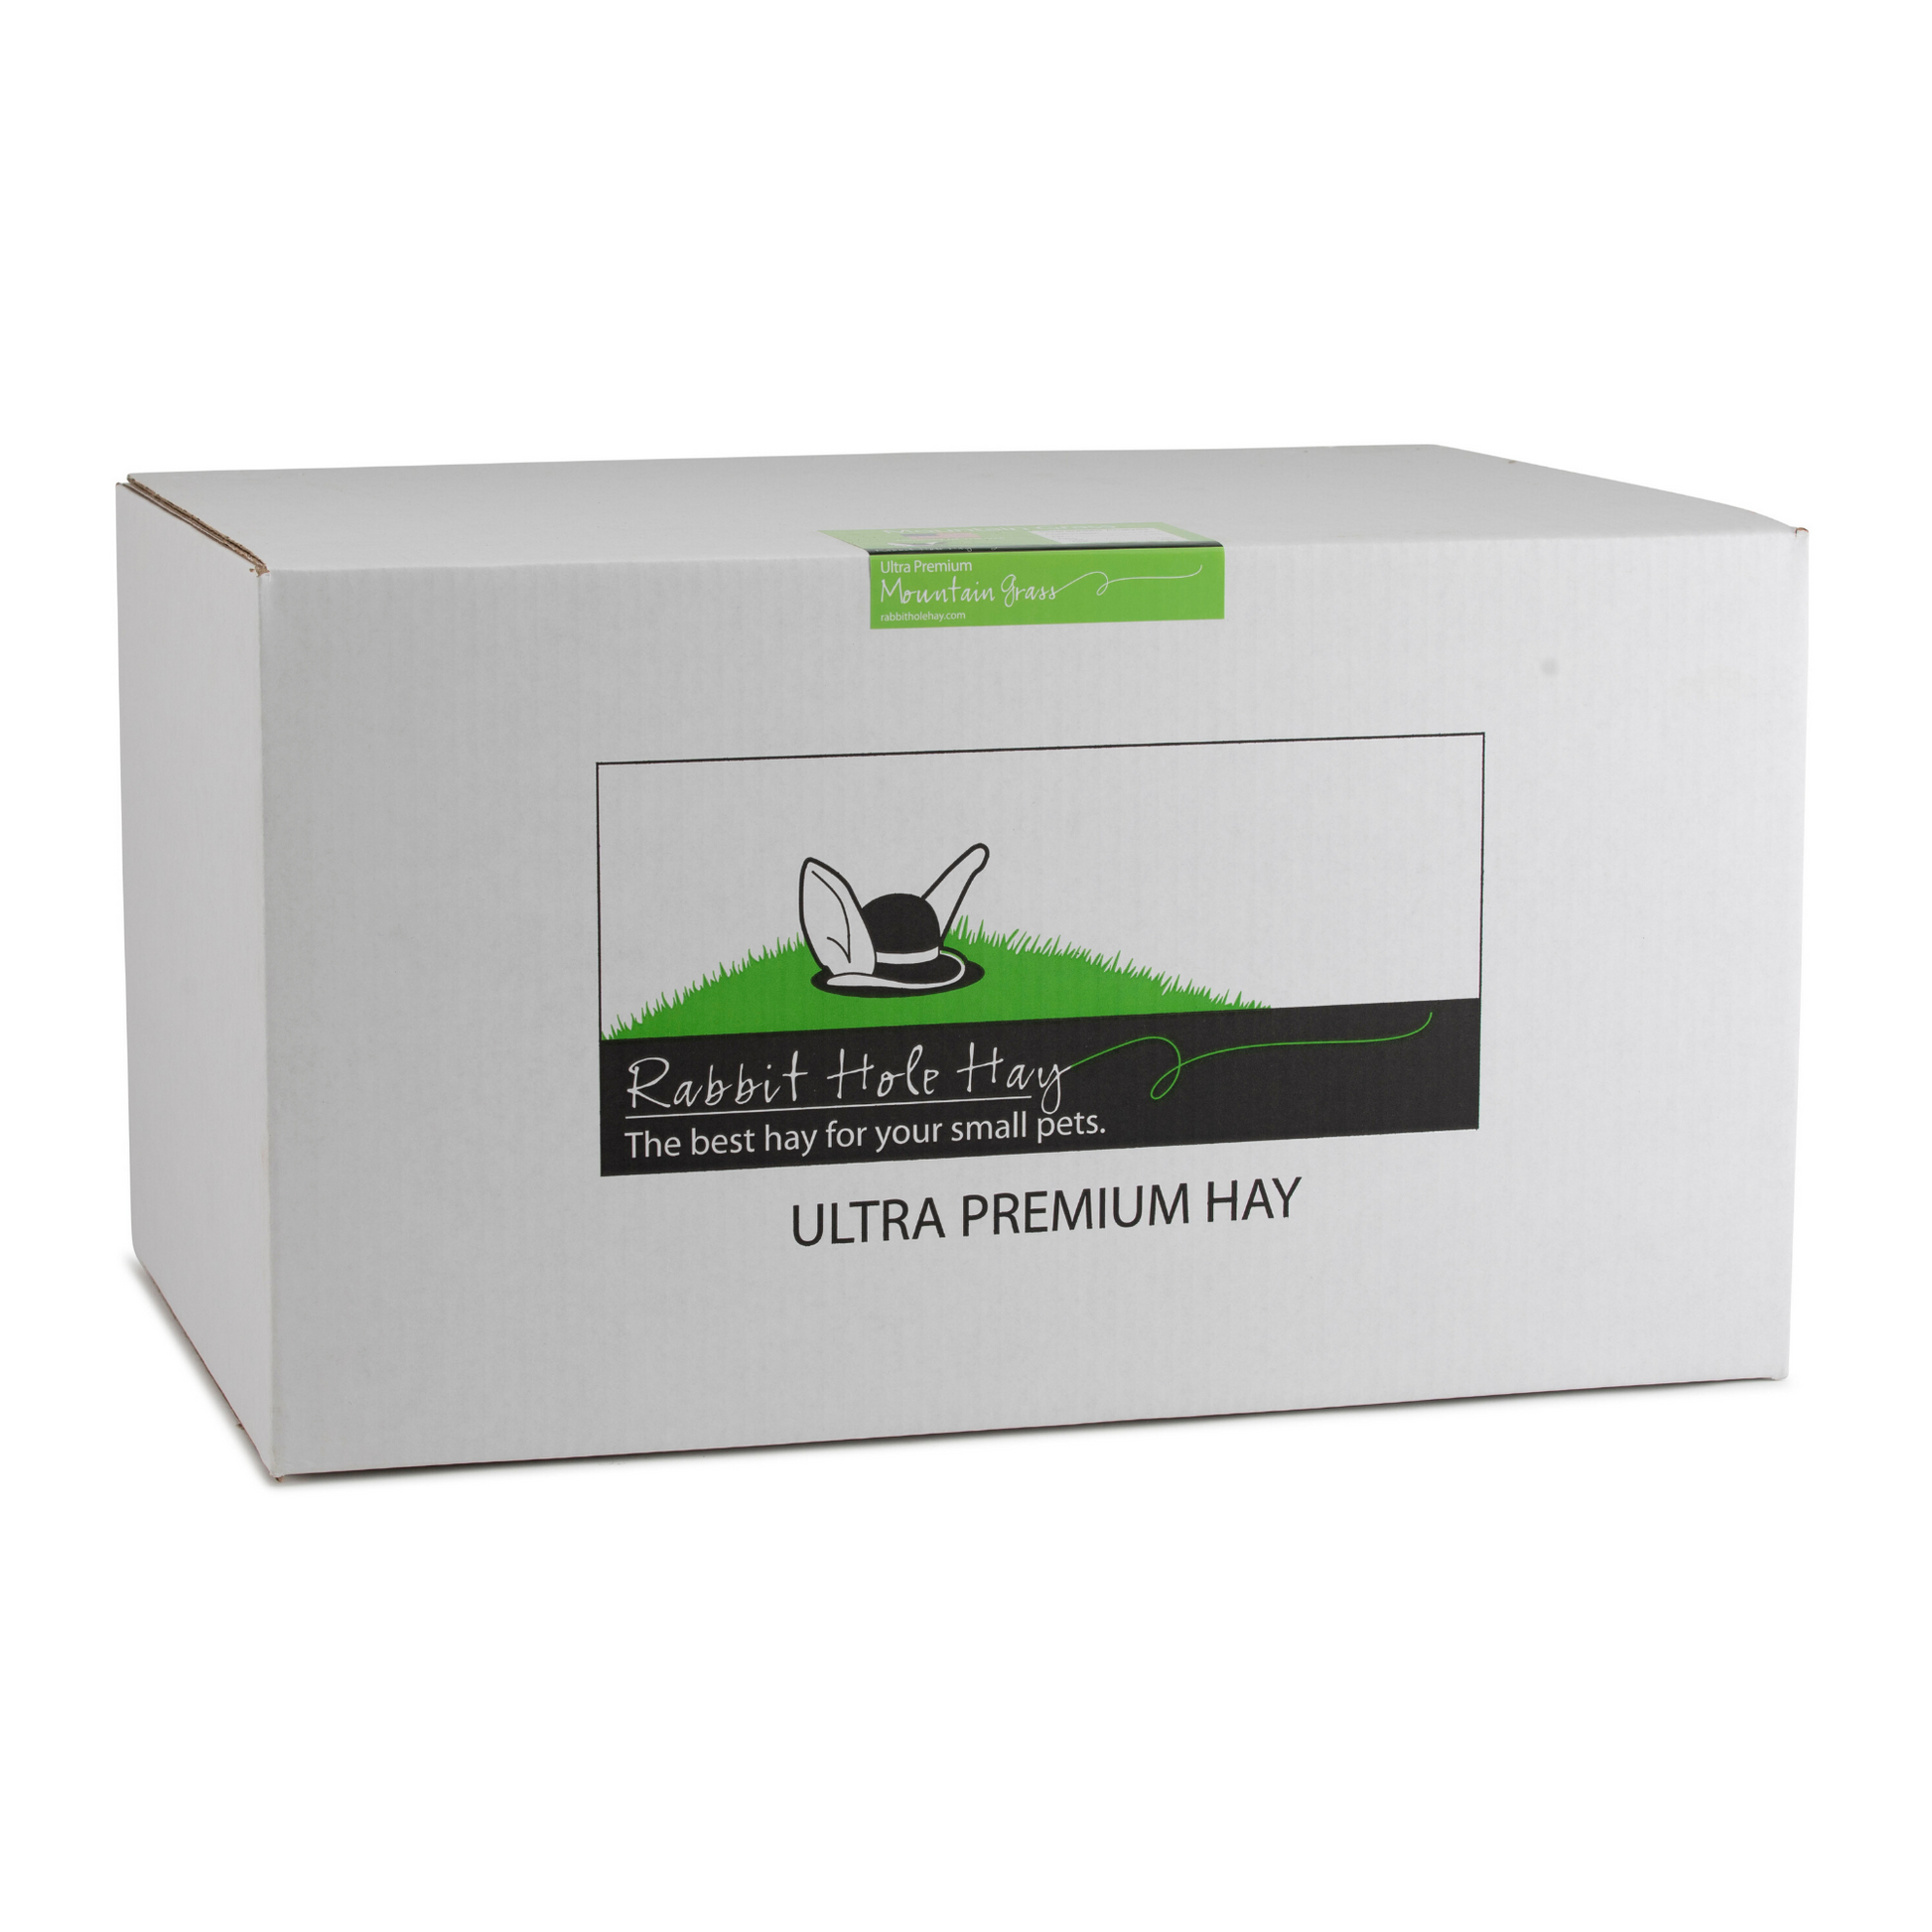 Ultra Premium Mountain Grass - 20lbs